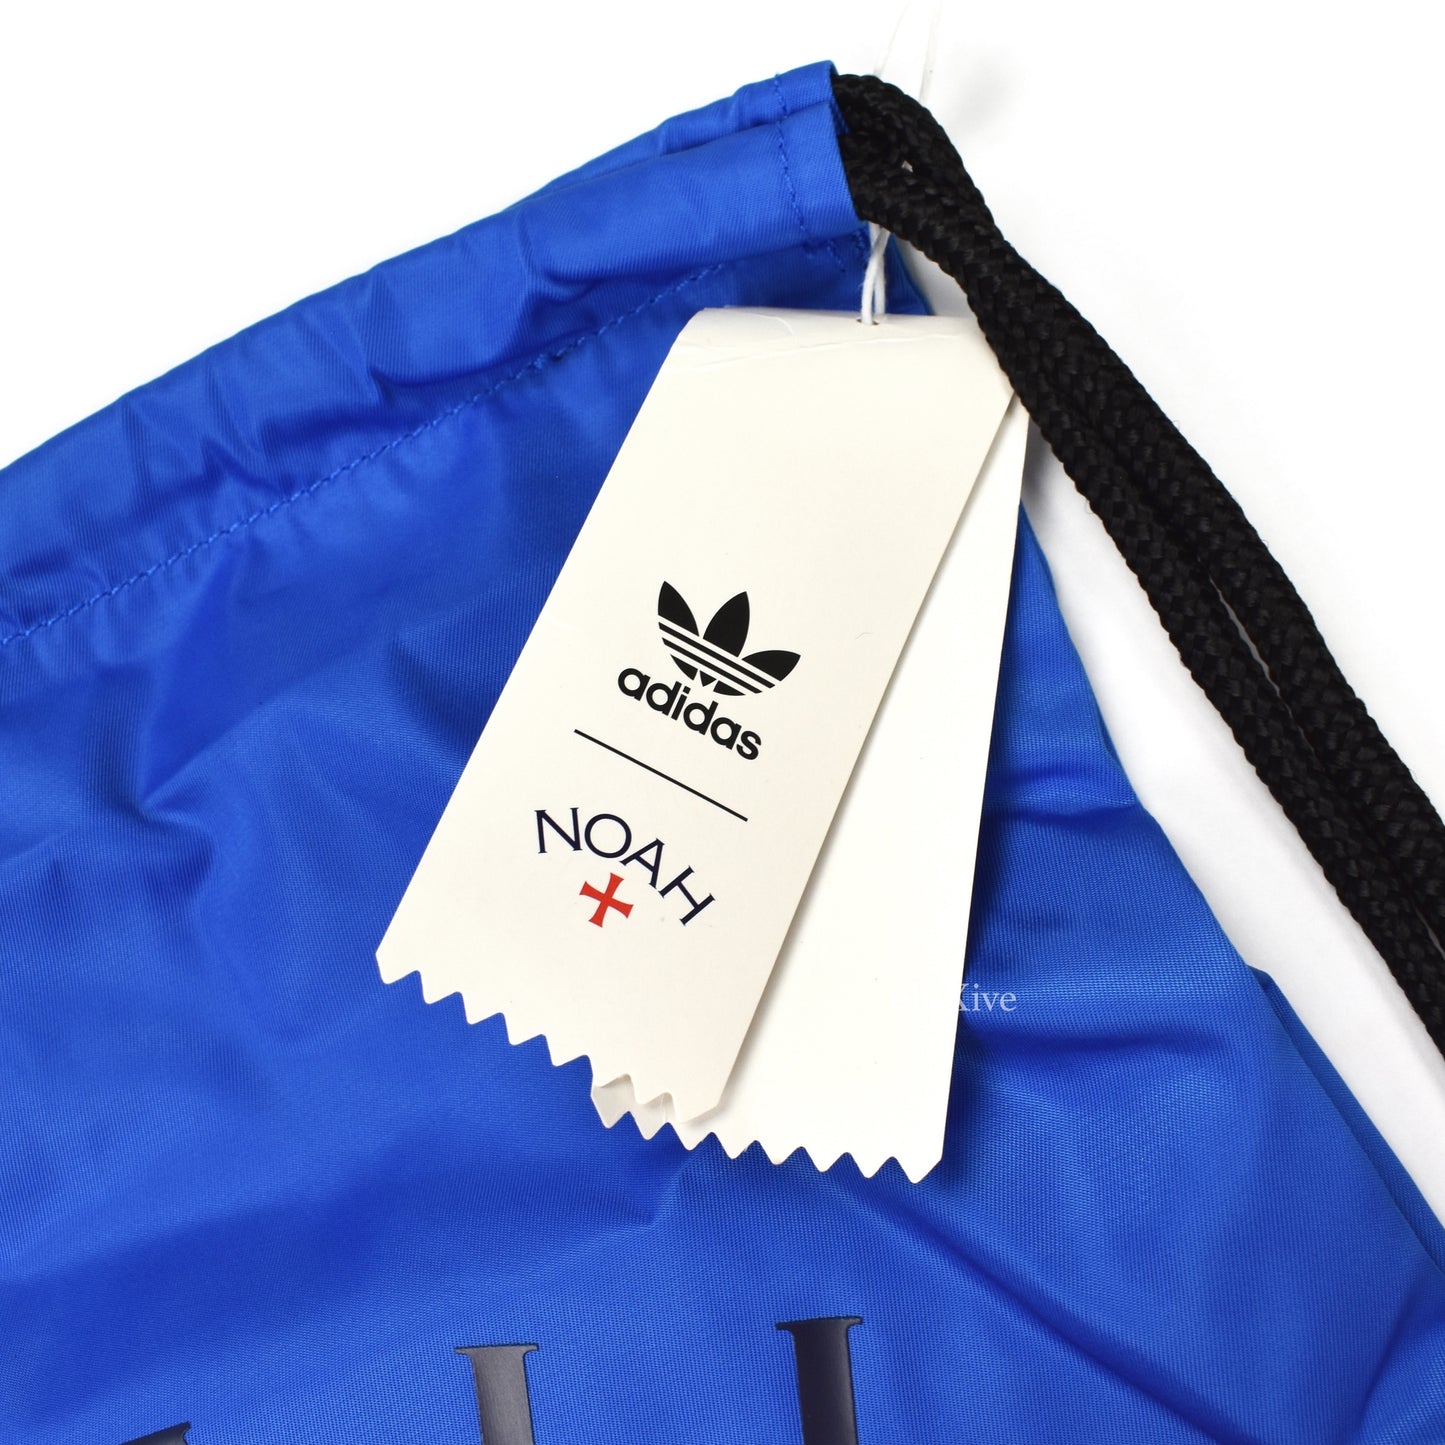 Noah x Adidas - Shell Core Logo Drawstring Bag (Blue)